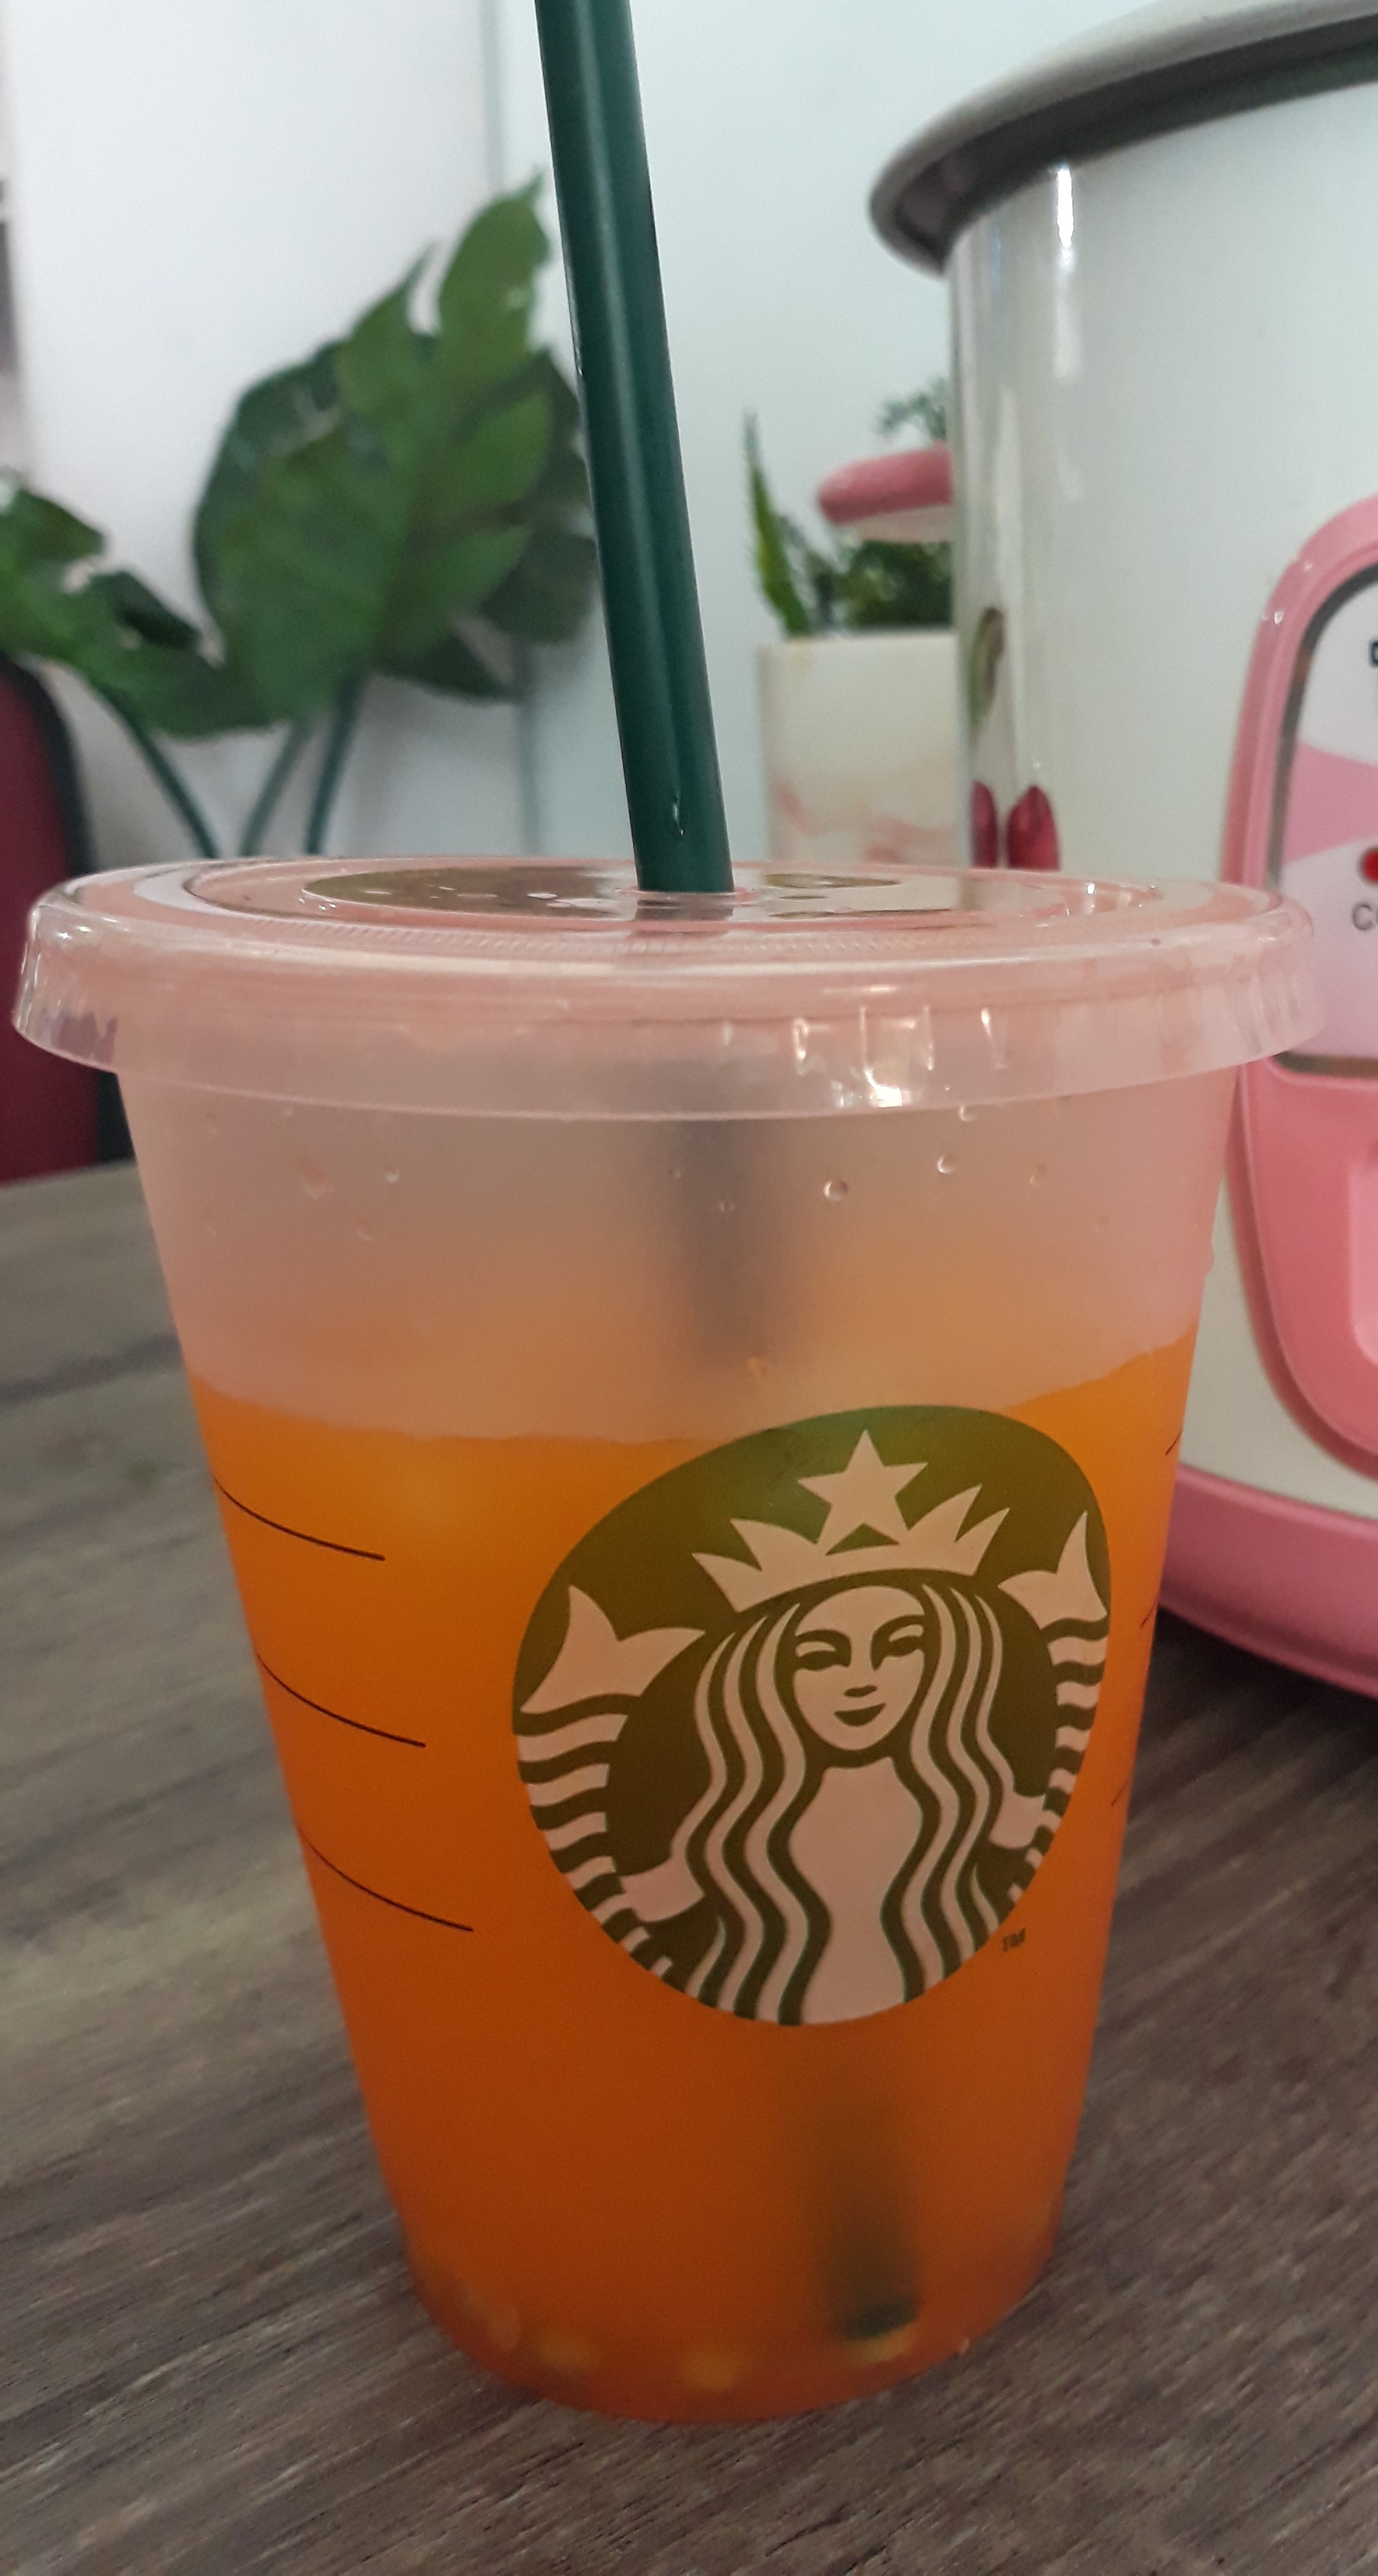 File:Orange juice in a Starbucks cup.jpg - Wikimedia Commons